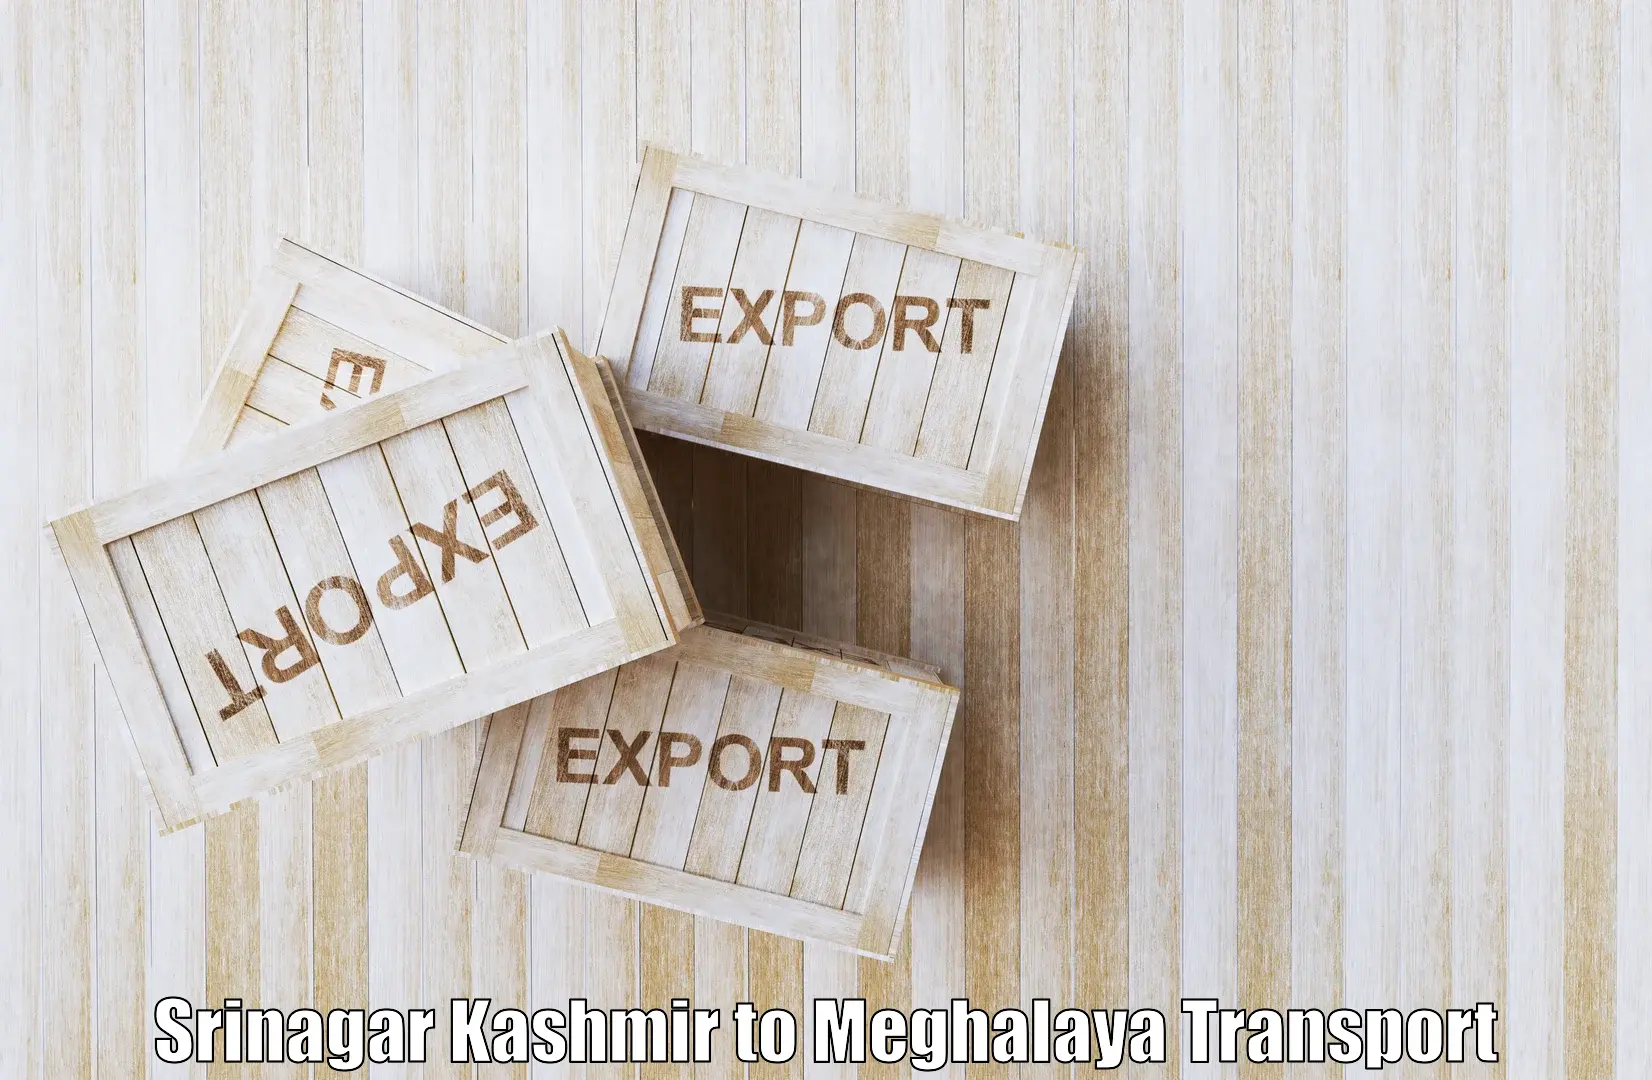 Nearby transport service Srinagar Kashmir to Meghalaya